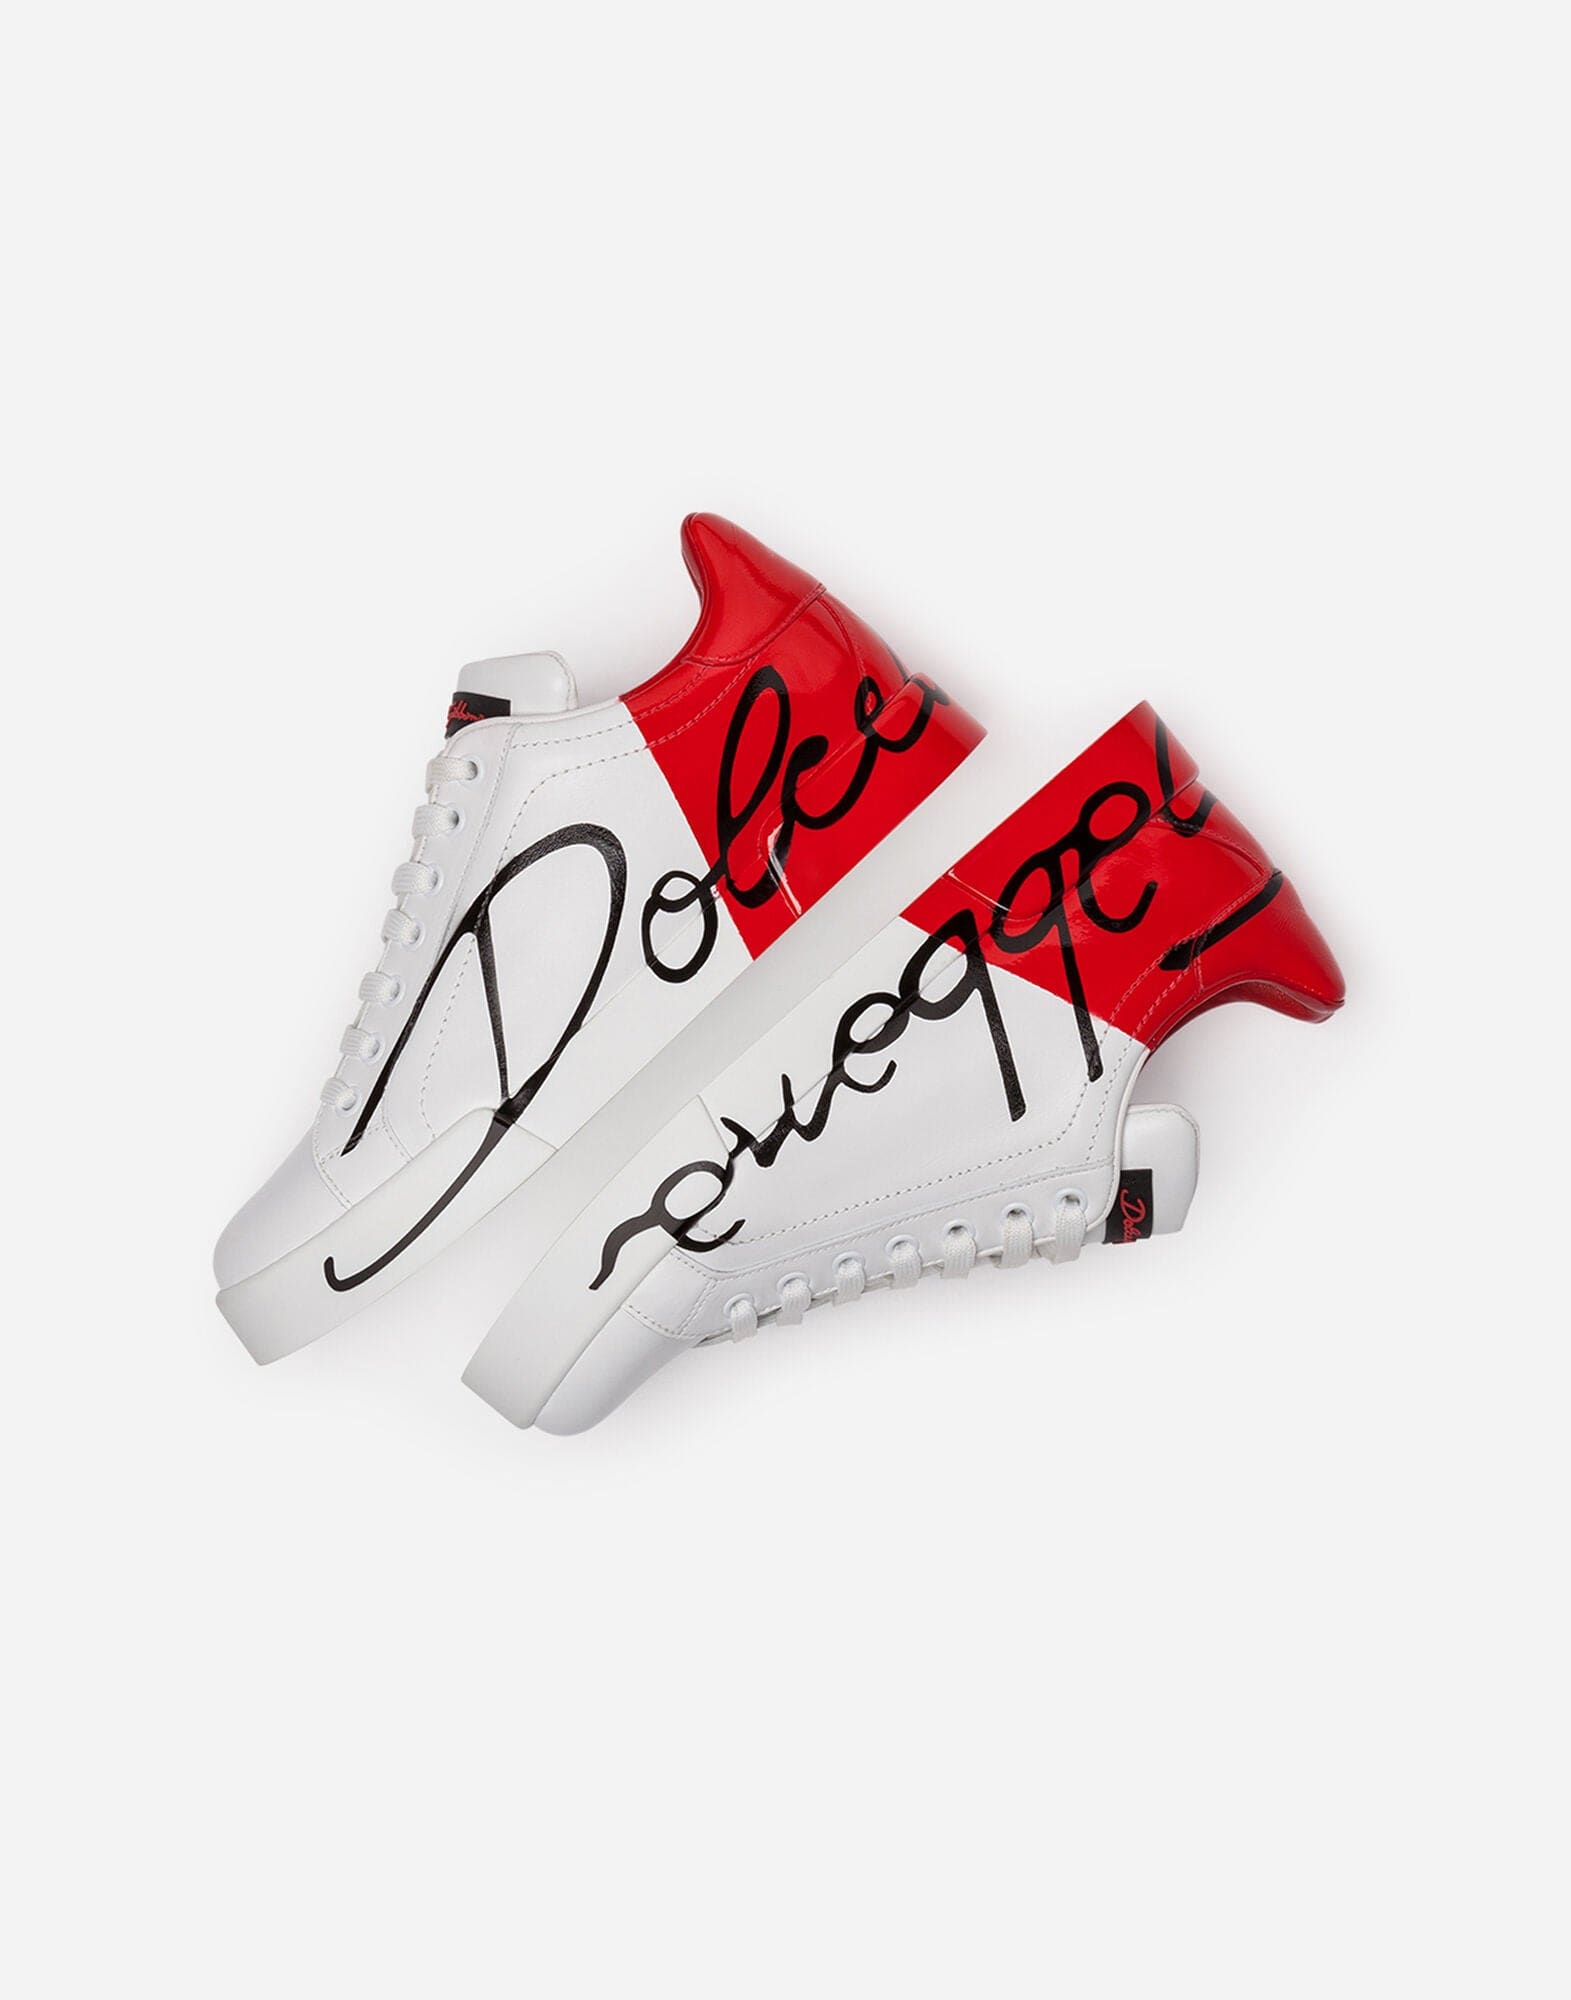 Leder -Portofino -Signaturen Sneaker